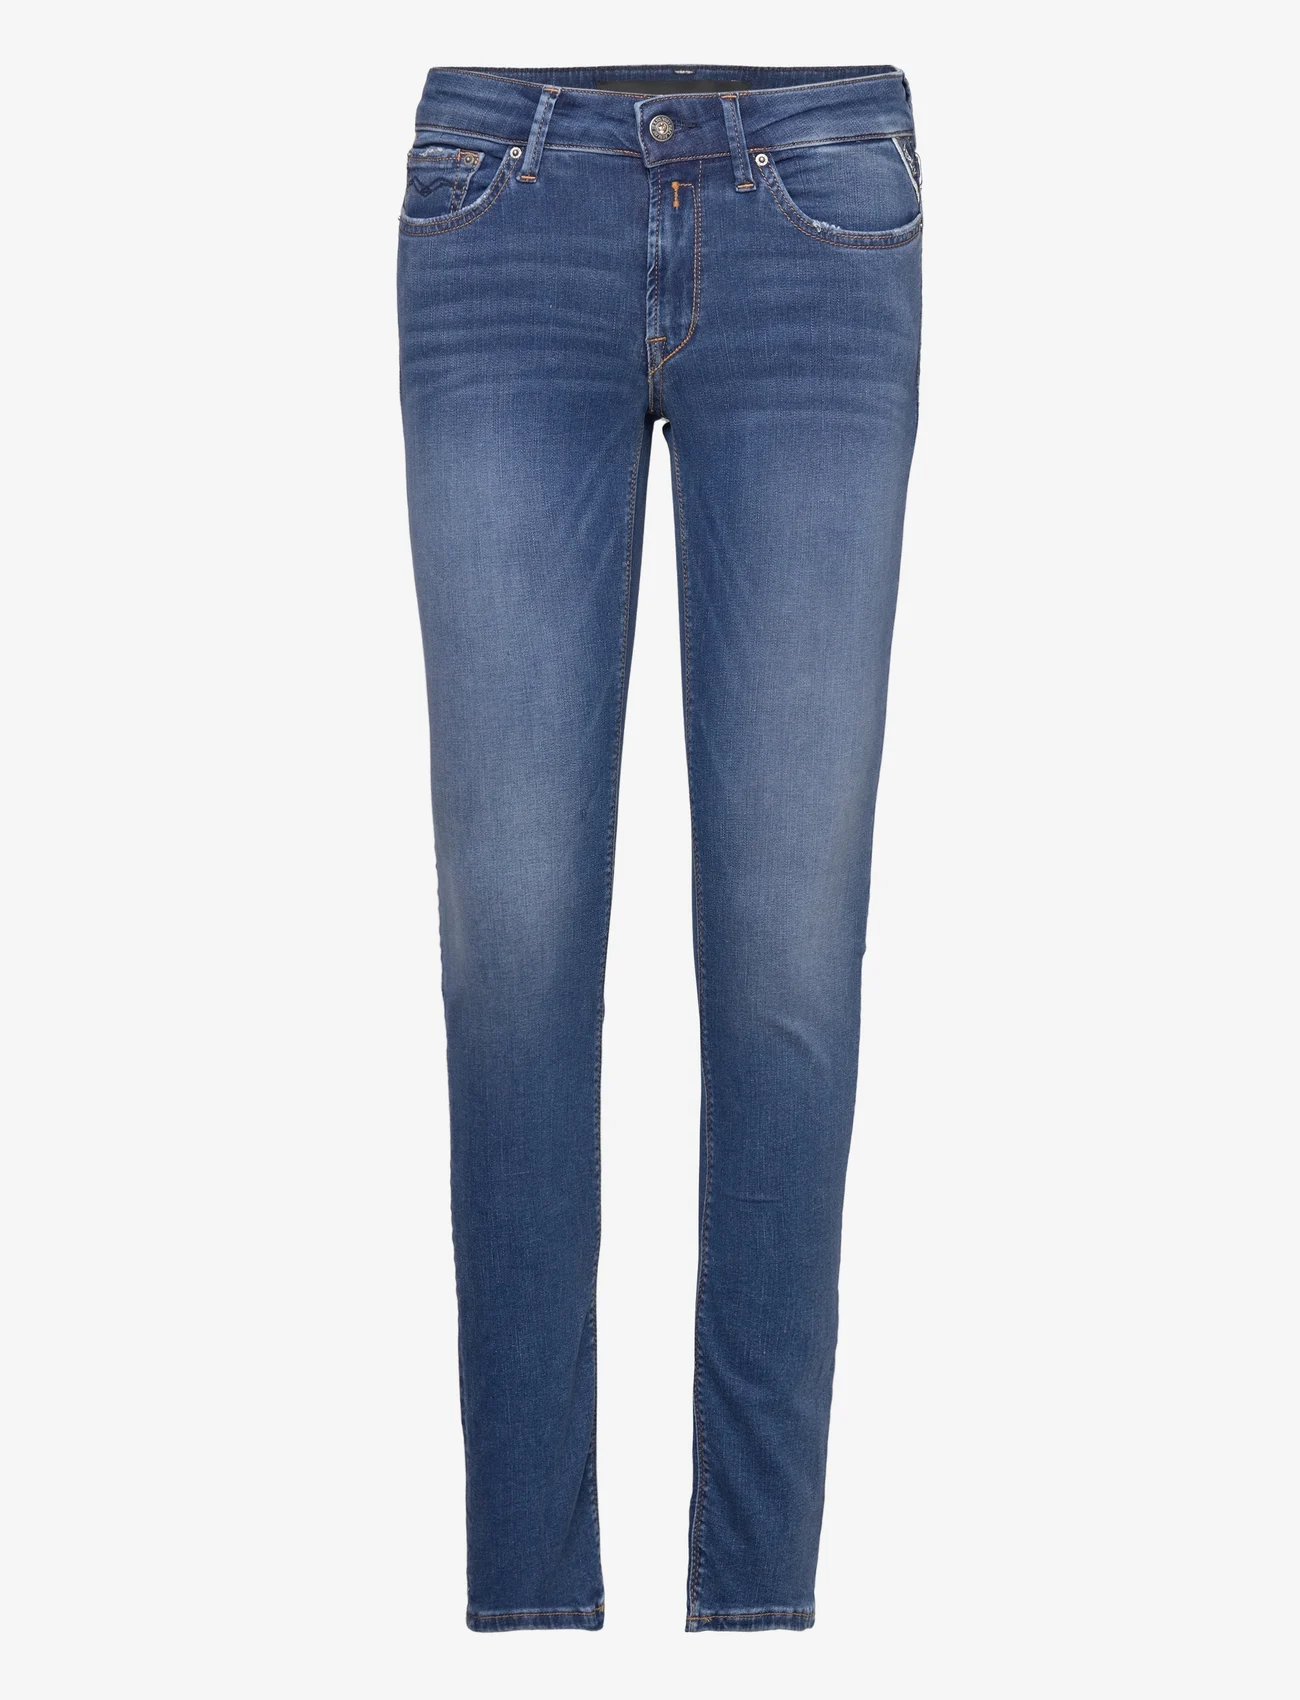 Replay - NEW LUZ Trousers SKINNY - dżinsy skinny fit - blue - 0